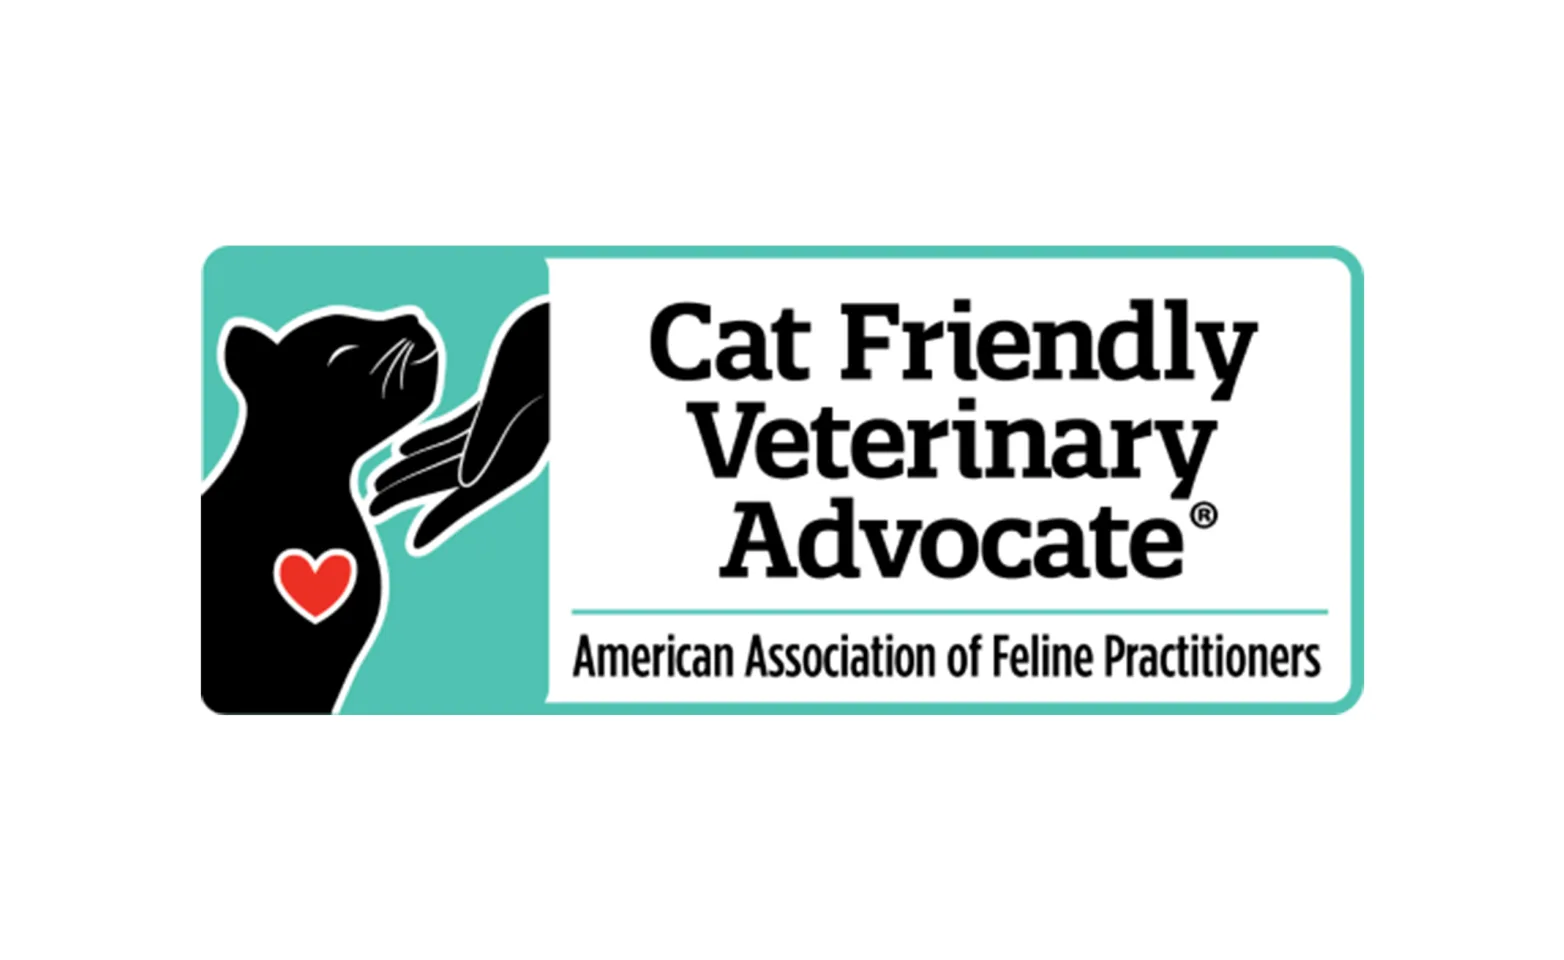 Cat Friendly Veterinary Advocate